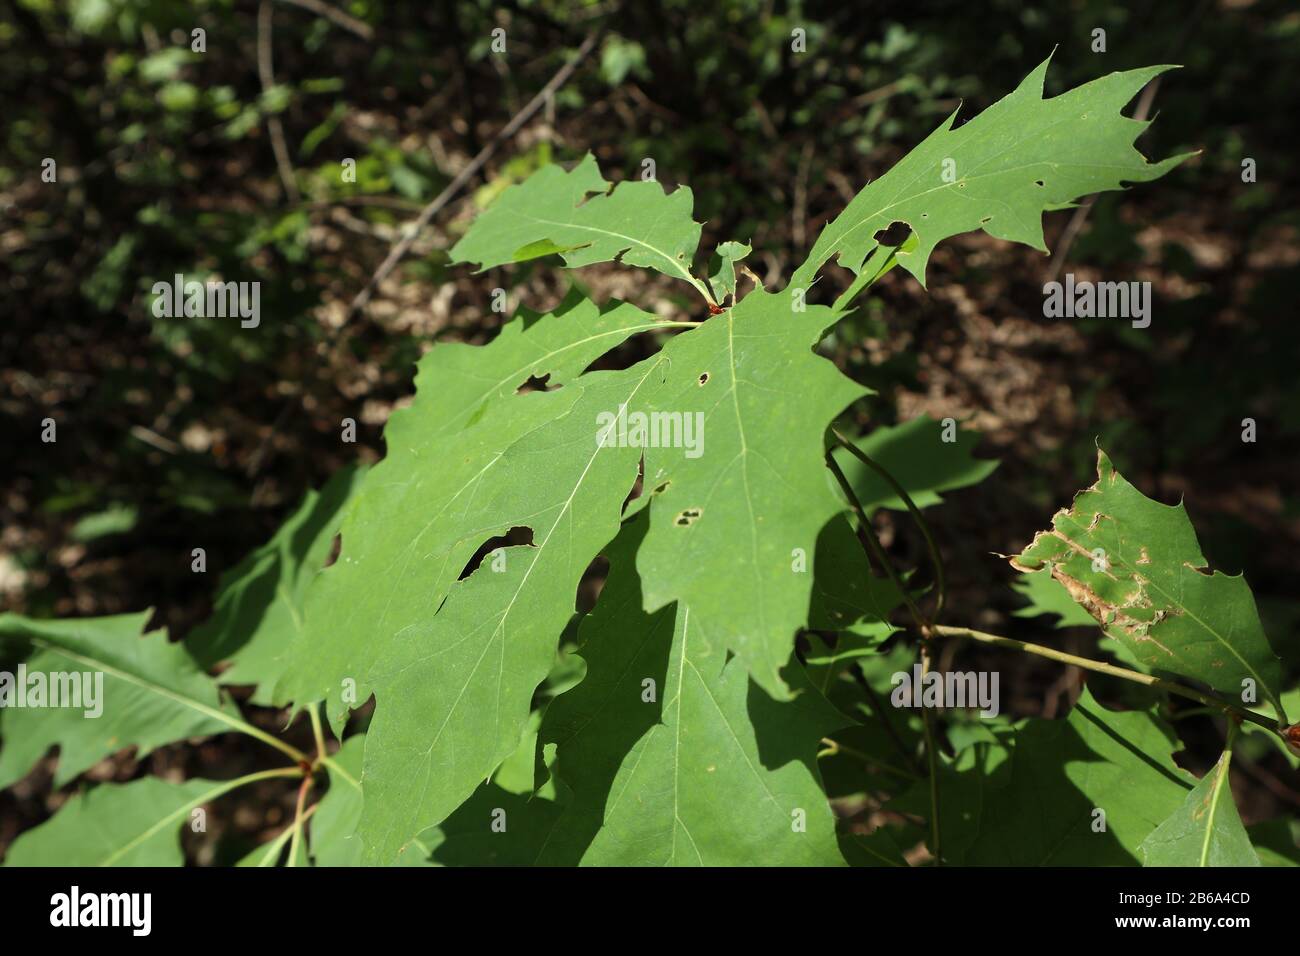 Verde quercia foglie natura soleggiata close-up estate all'aperto foresta sfondo Foto Stock